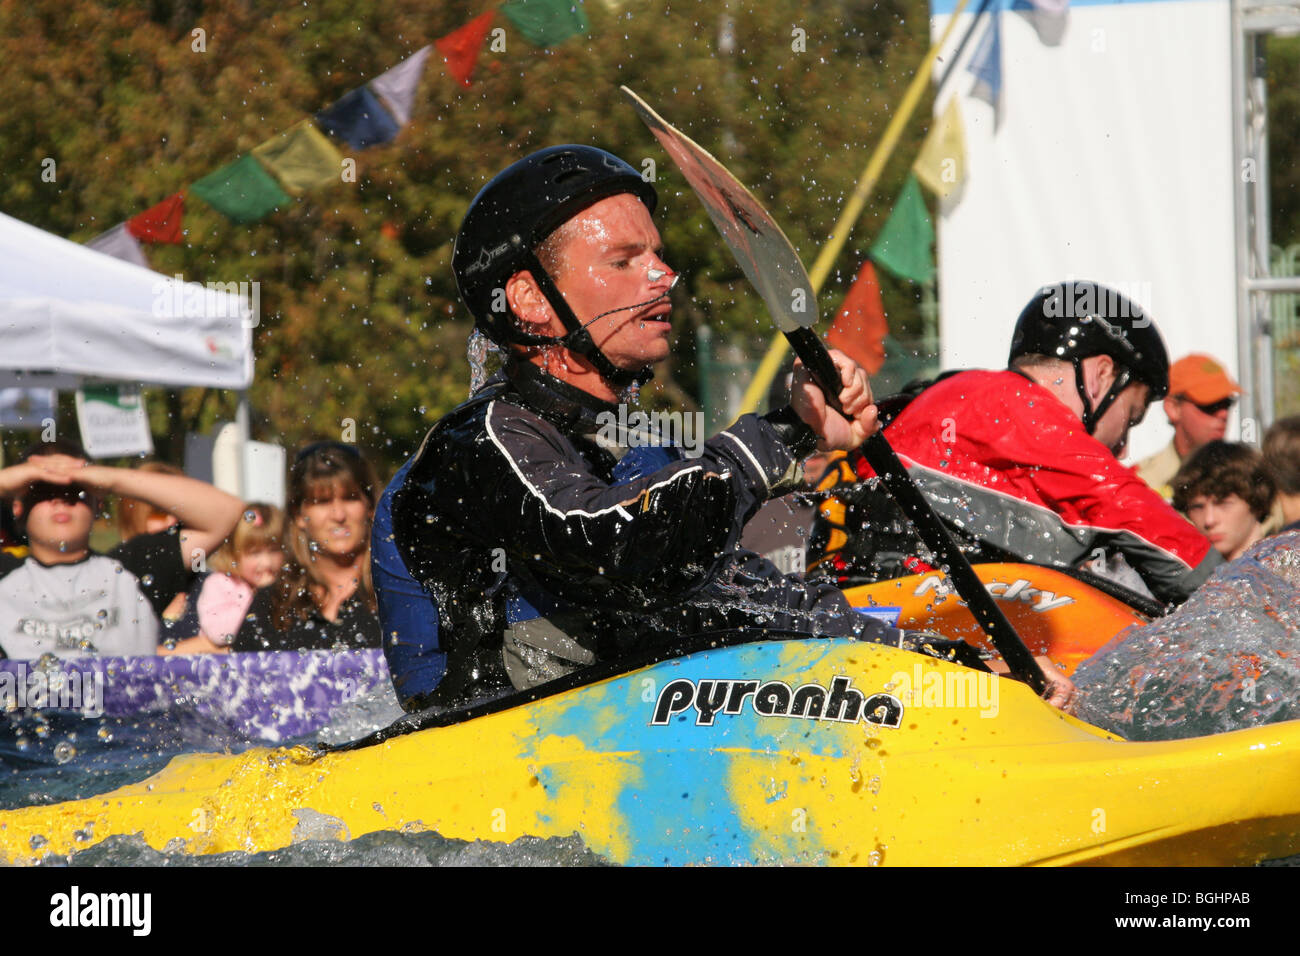 Kayak Demonstration at Gearfest, Eastwood Metropark, Dayton, Ohio, USA. Pyranha brand Kayak. Pro Tec brand Helmet. Stock Photo